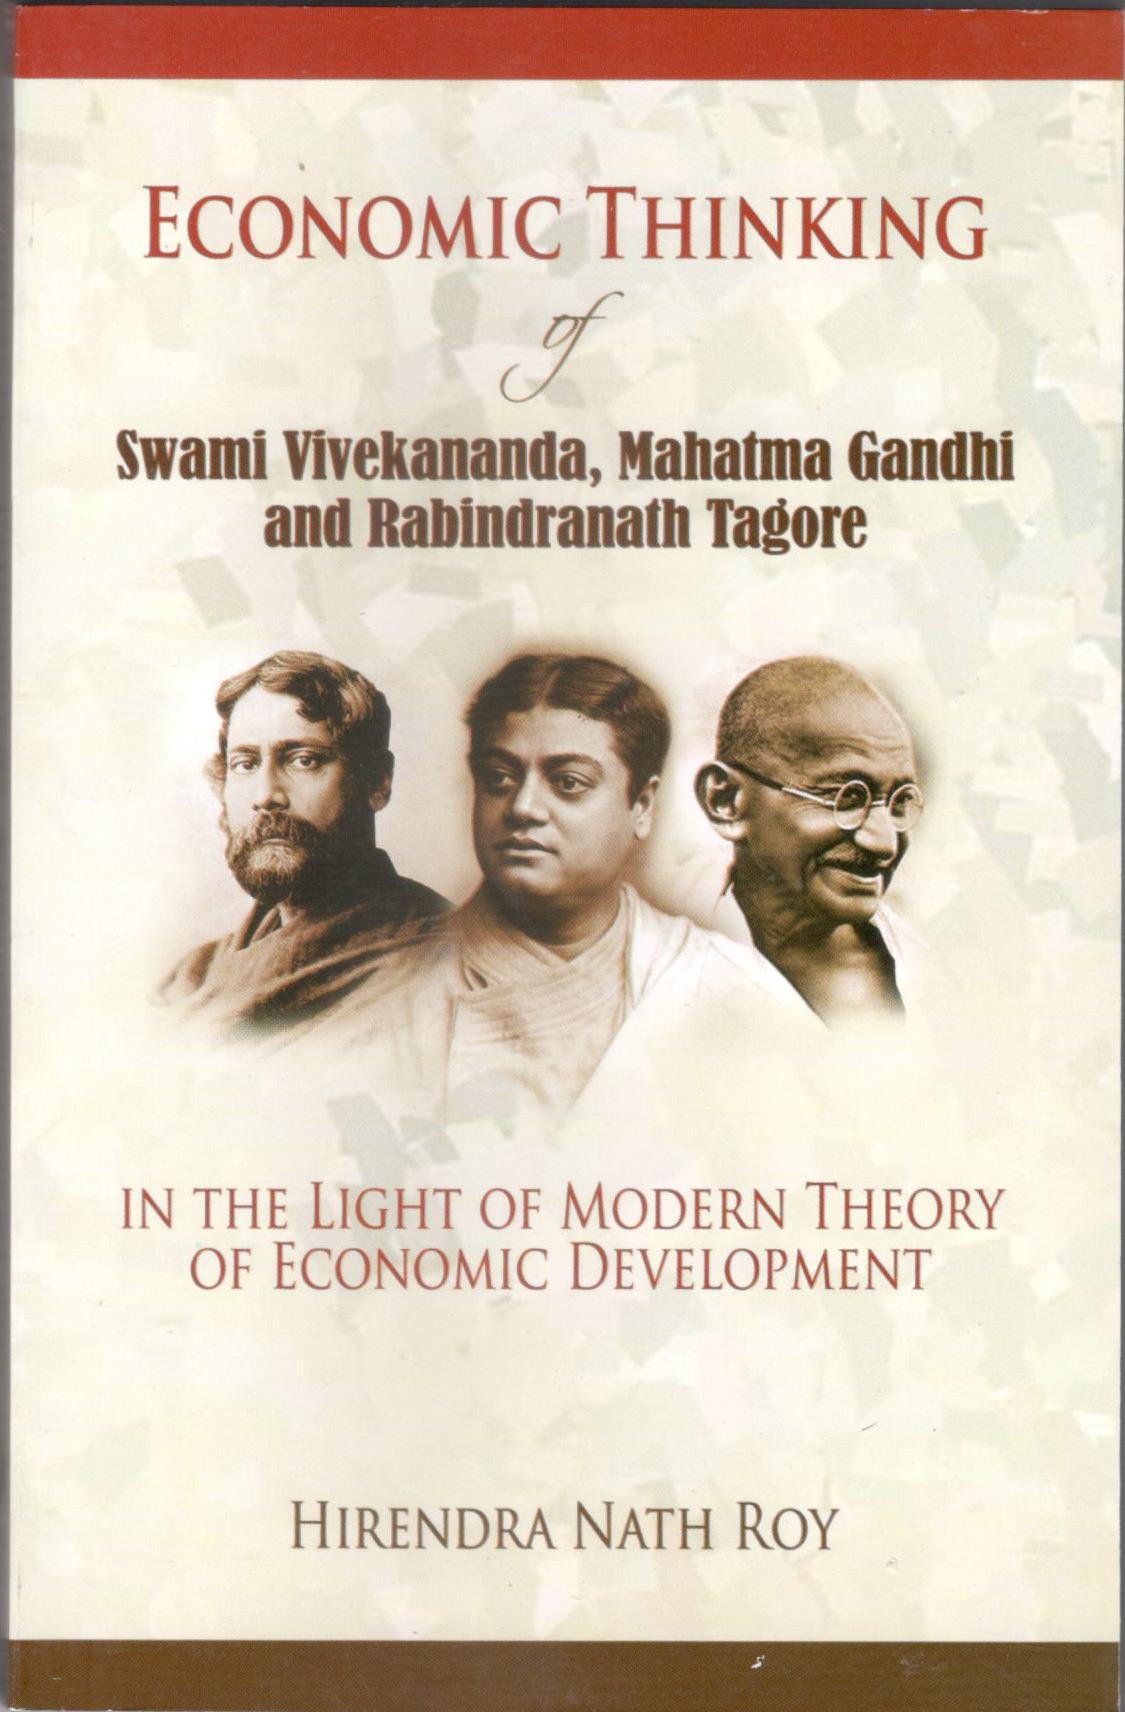 Economic Thinking of Swami Vivekananda, Mahatma Gandhi & Rabindranath Tagore